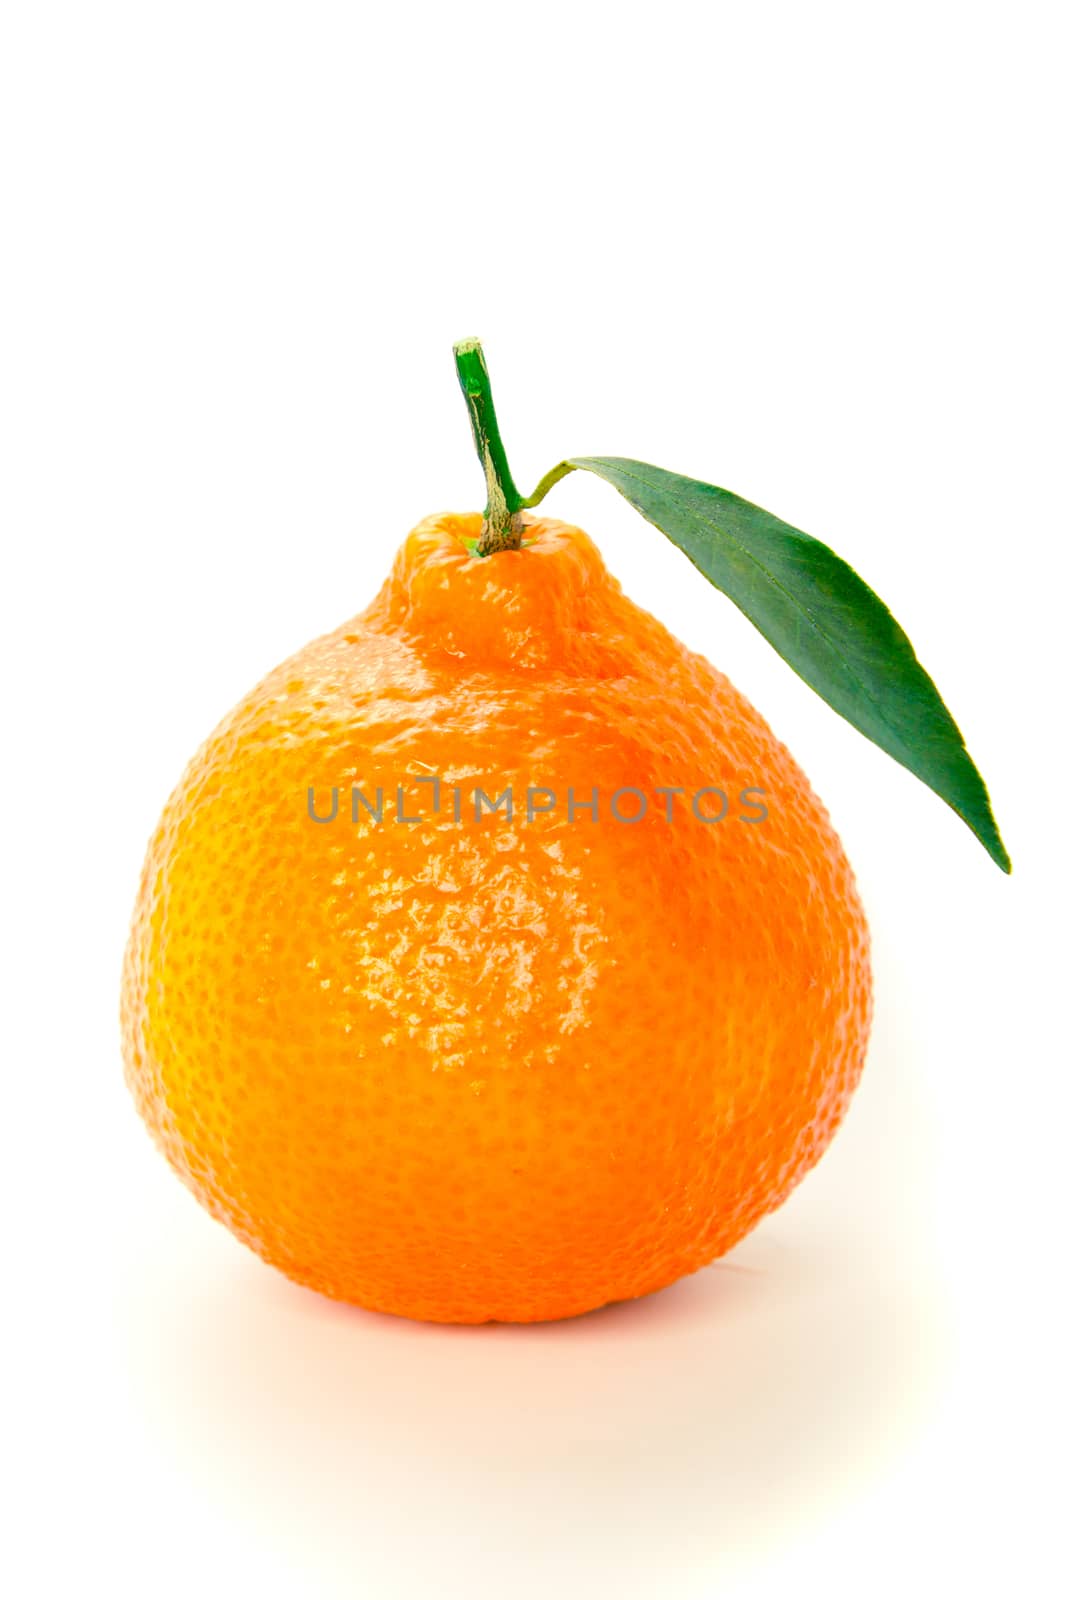 orange mandarins with green leaf isolated on white background by motorolka